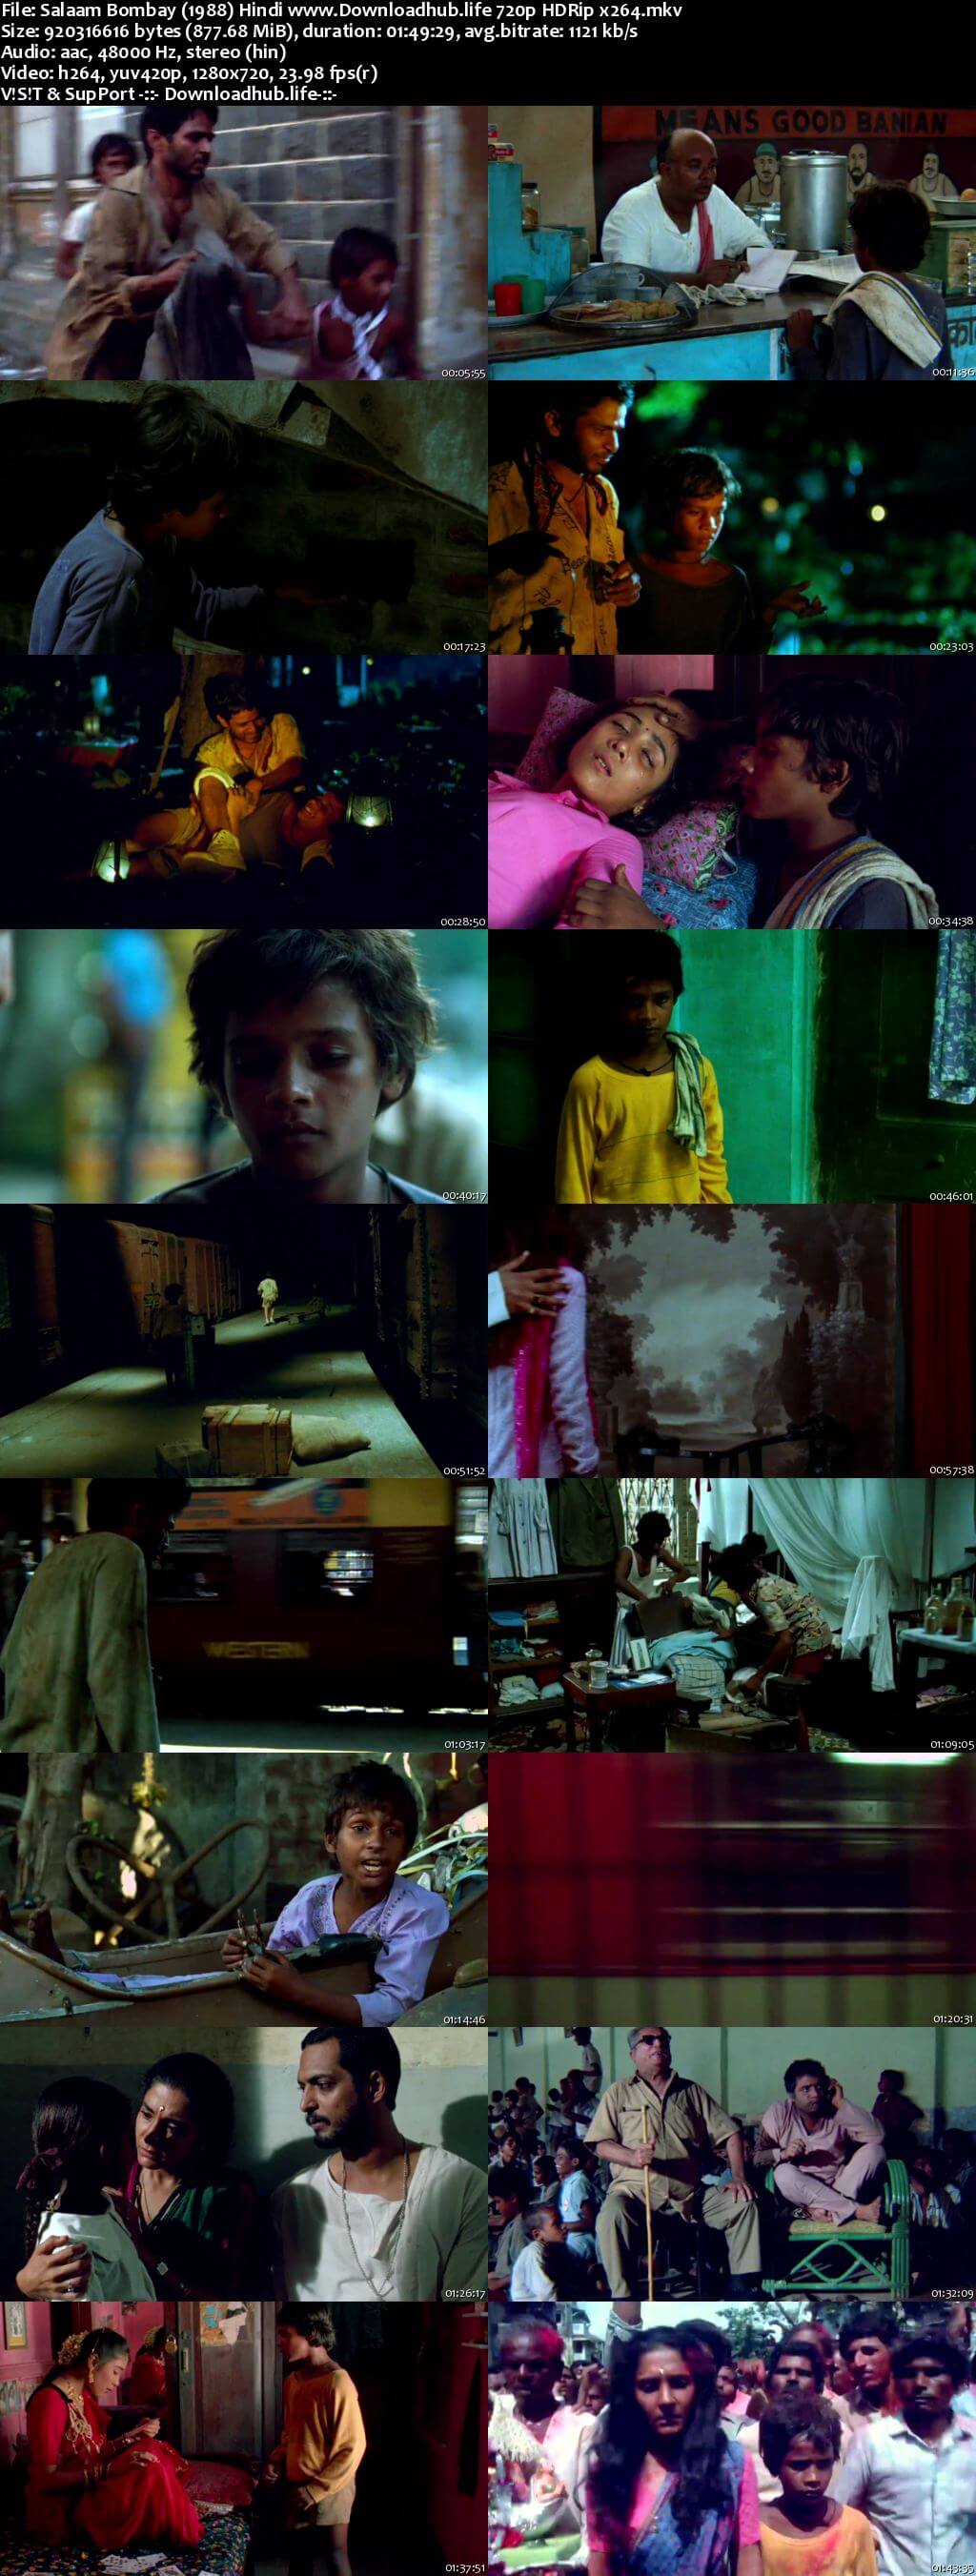 Salaam Bombay 1988 Hindi 720p HDRip x264